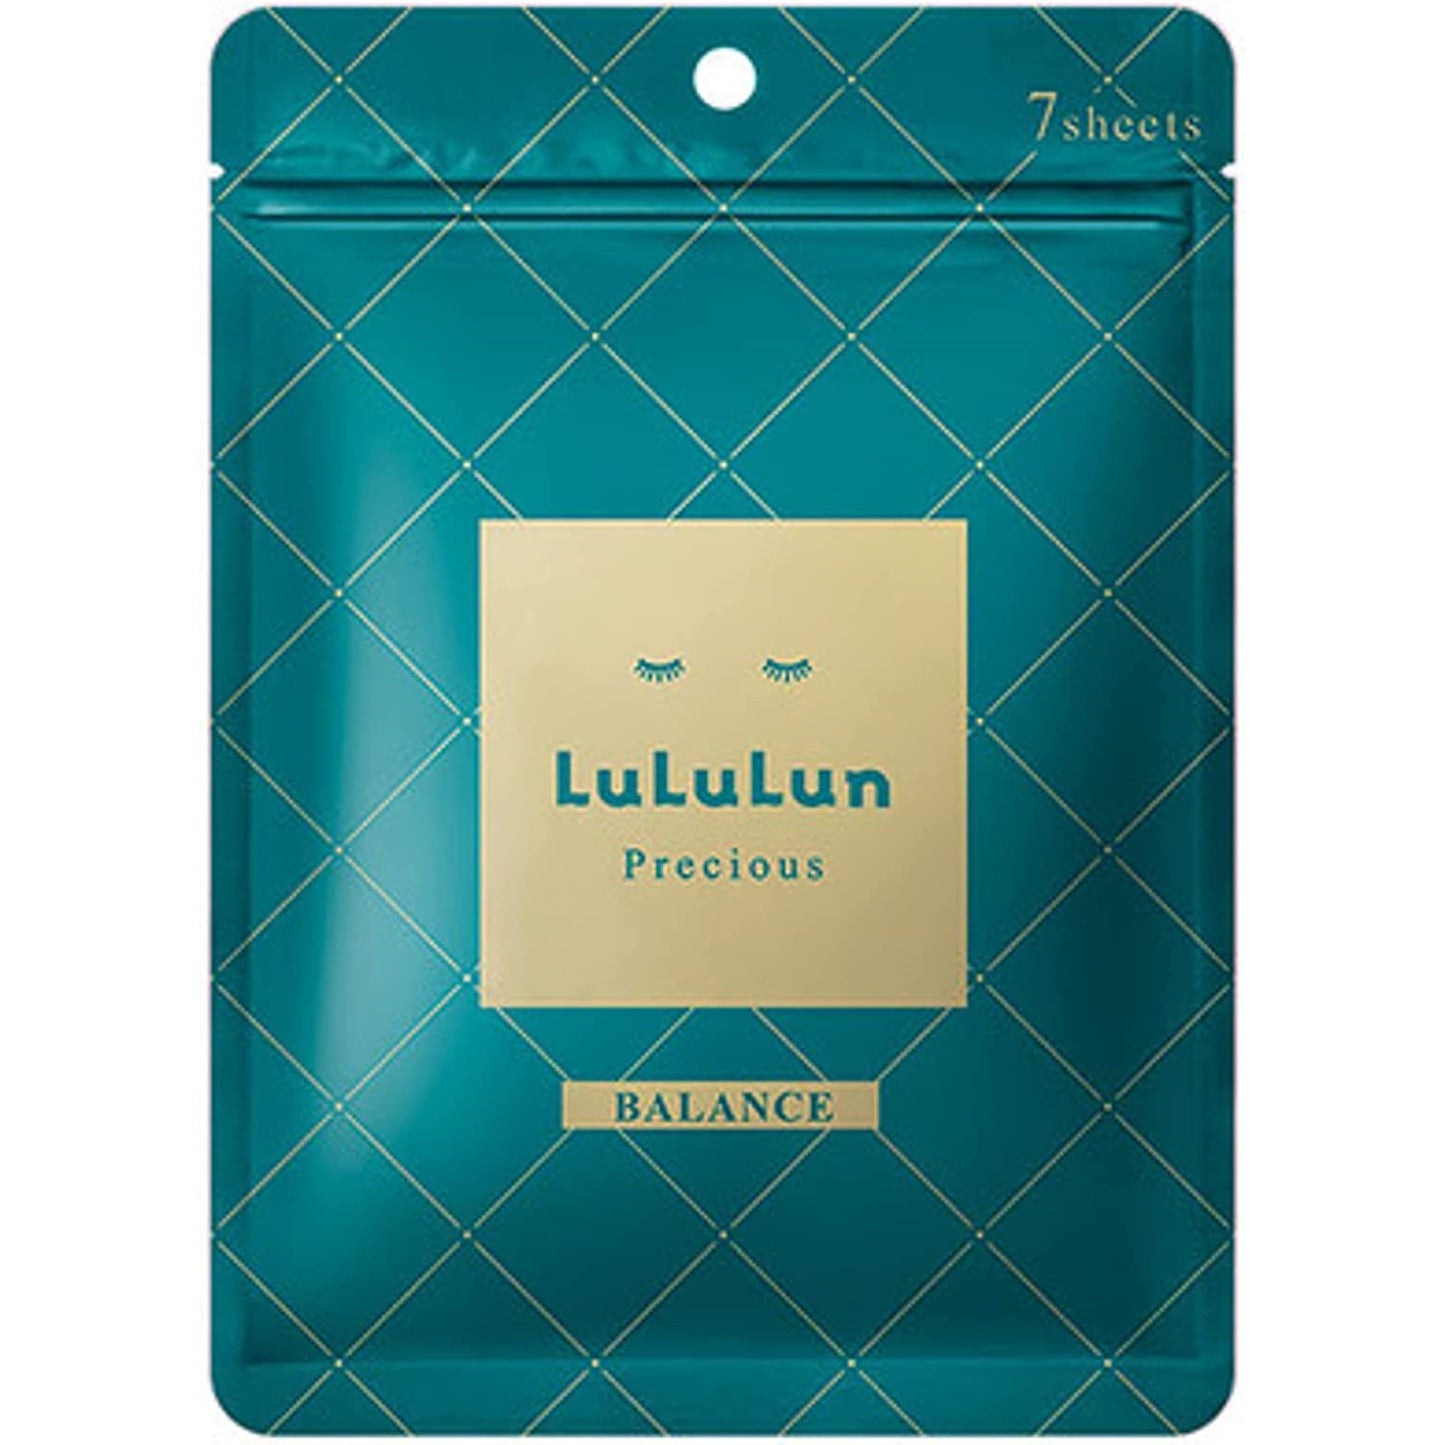 LuLuLun Precious Sheet Mask Balance 7pcs (Made in Japan)